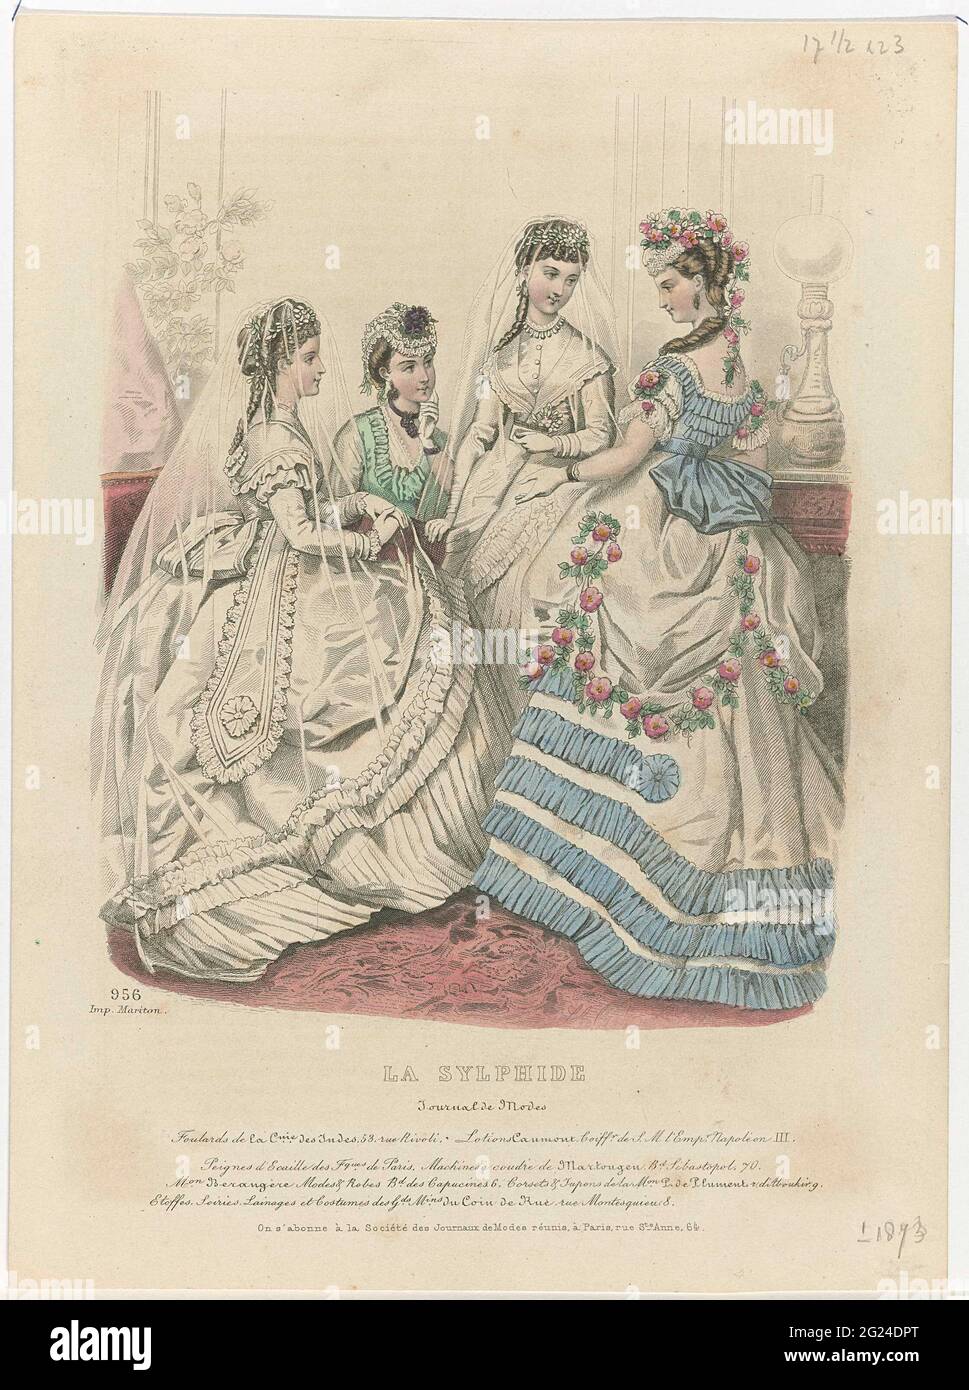 La Sylphide, ca. 1873, No. 956: Foulards de la Cuie des Indes (...). Four  women in interior. According to the caption, the fabrics from Compagnie des  Indes, the Jokes of the Berangère